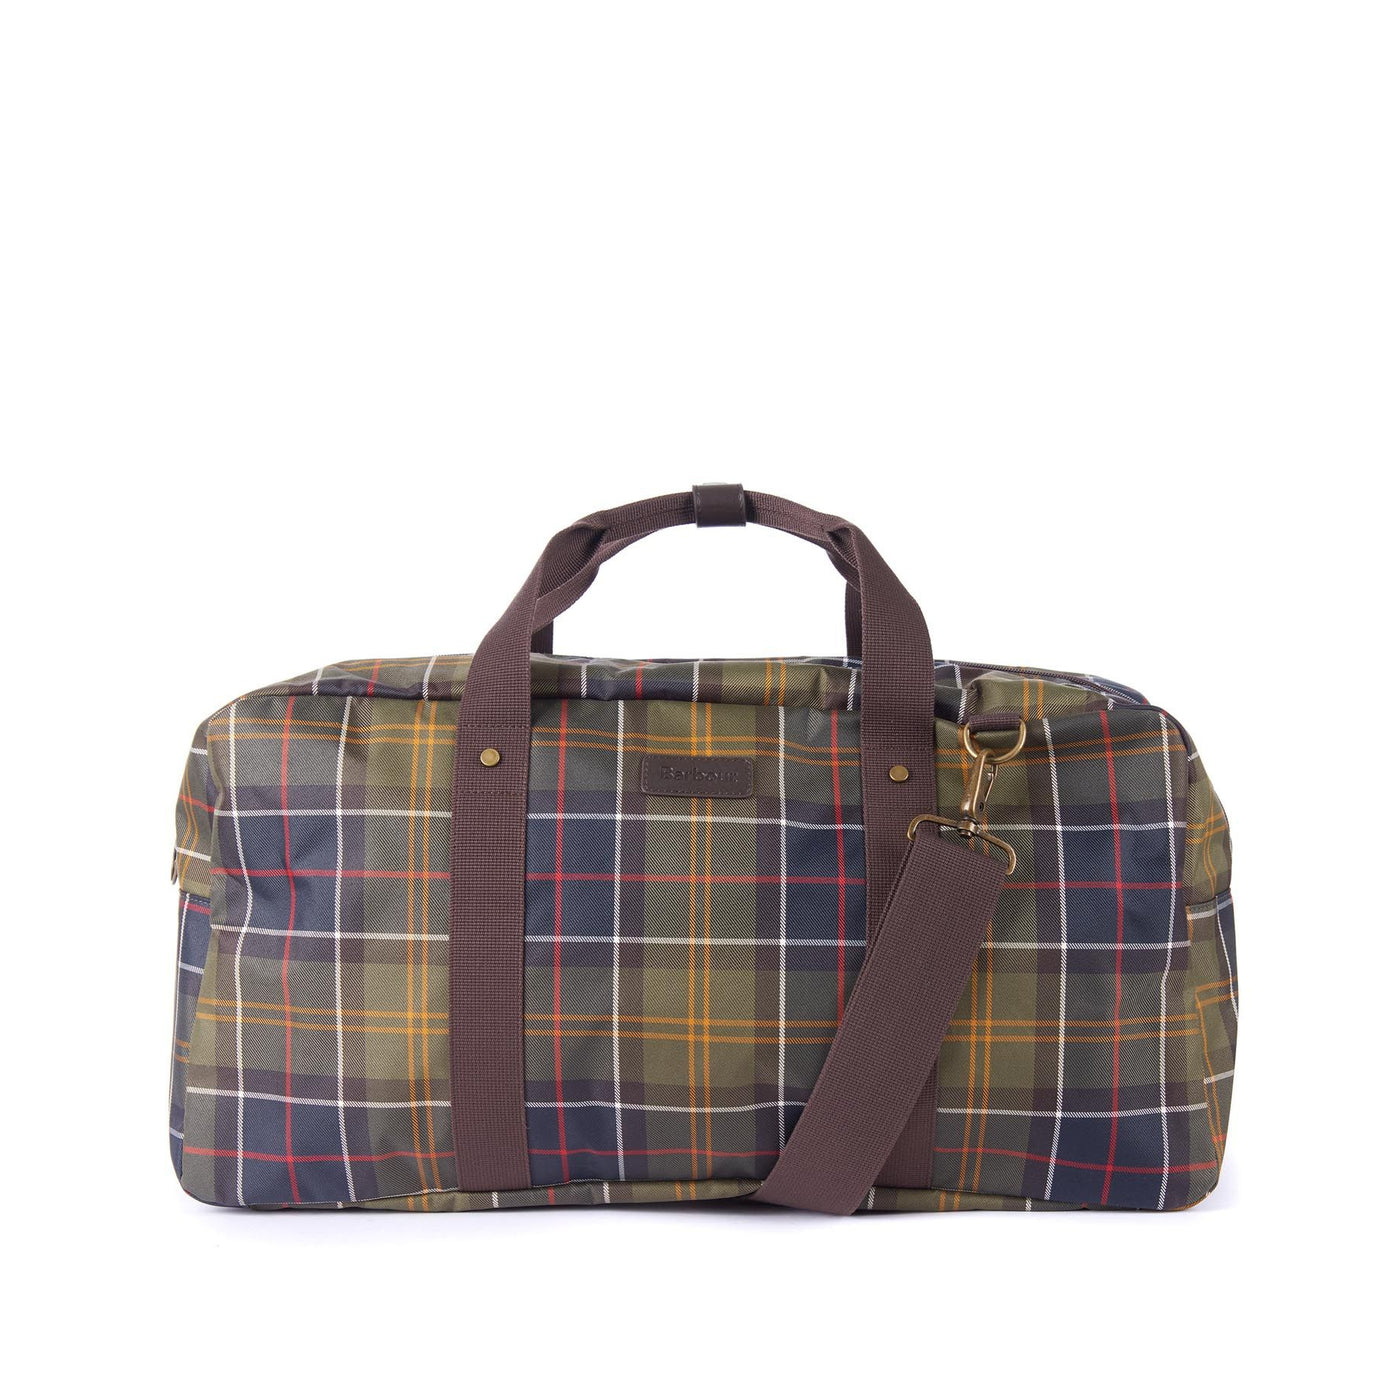 Barbour Torridon Holdall-Luggage-Tartan-Kevin's Fine Outdoor Gear & Apparel